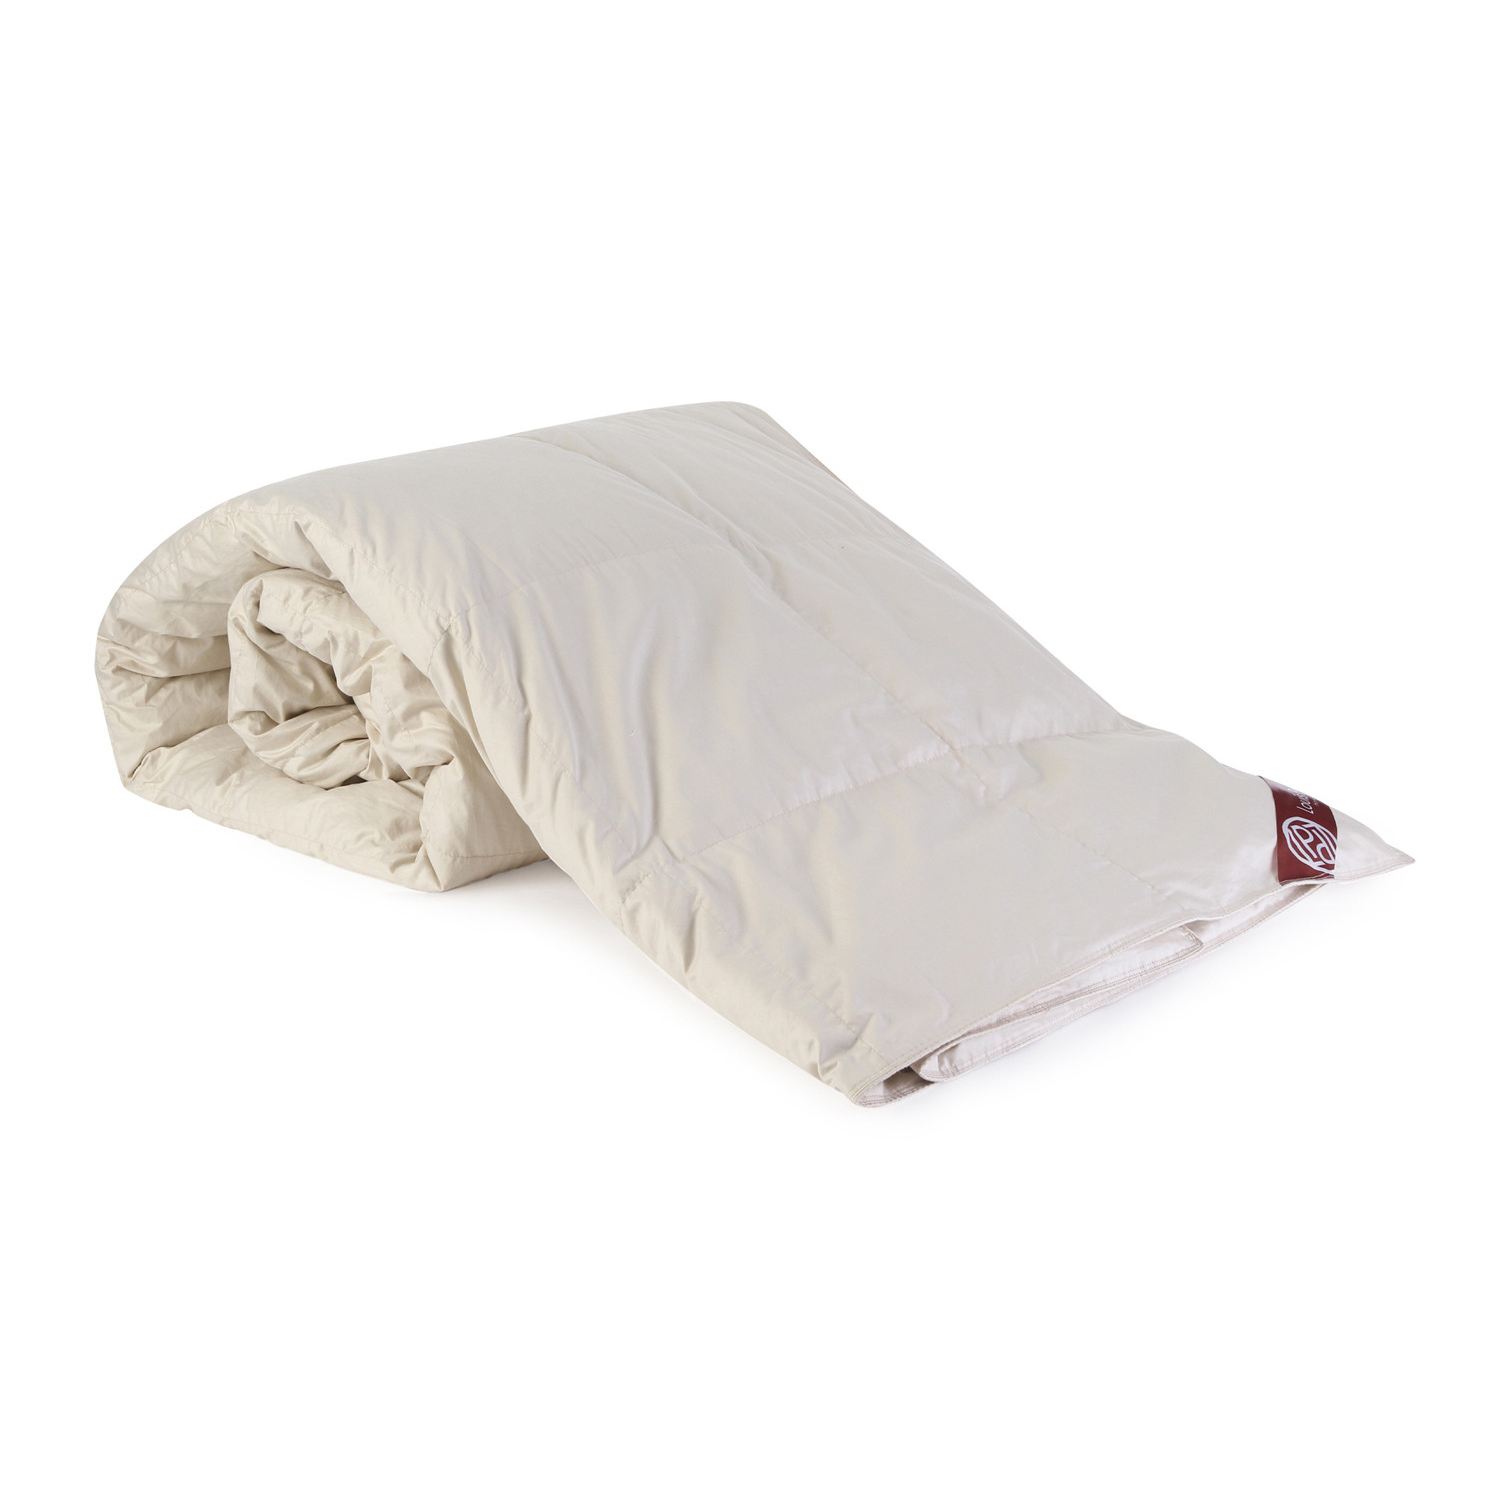 Пуховое одеяло Louis Pascal Николь бежевое 140х205 см (ЛП2022) пуховое одеяло louis pascal камилла белое 200х220 см лп2034